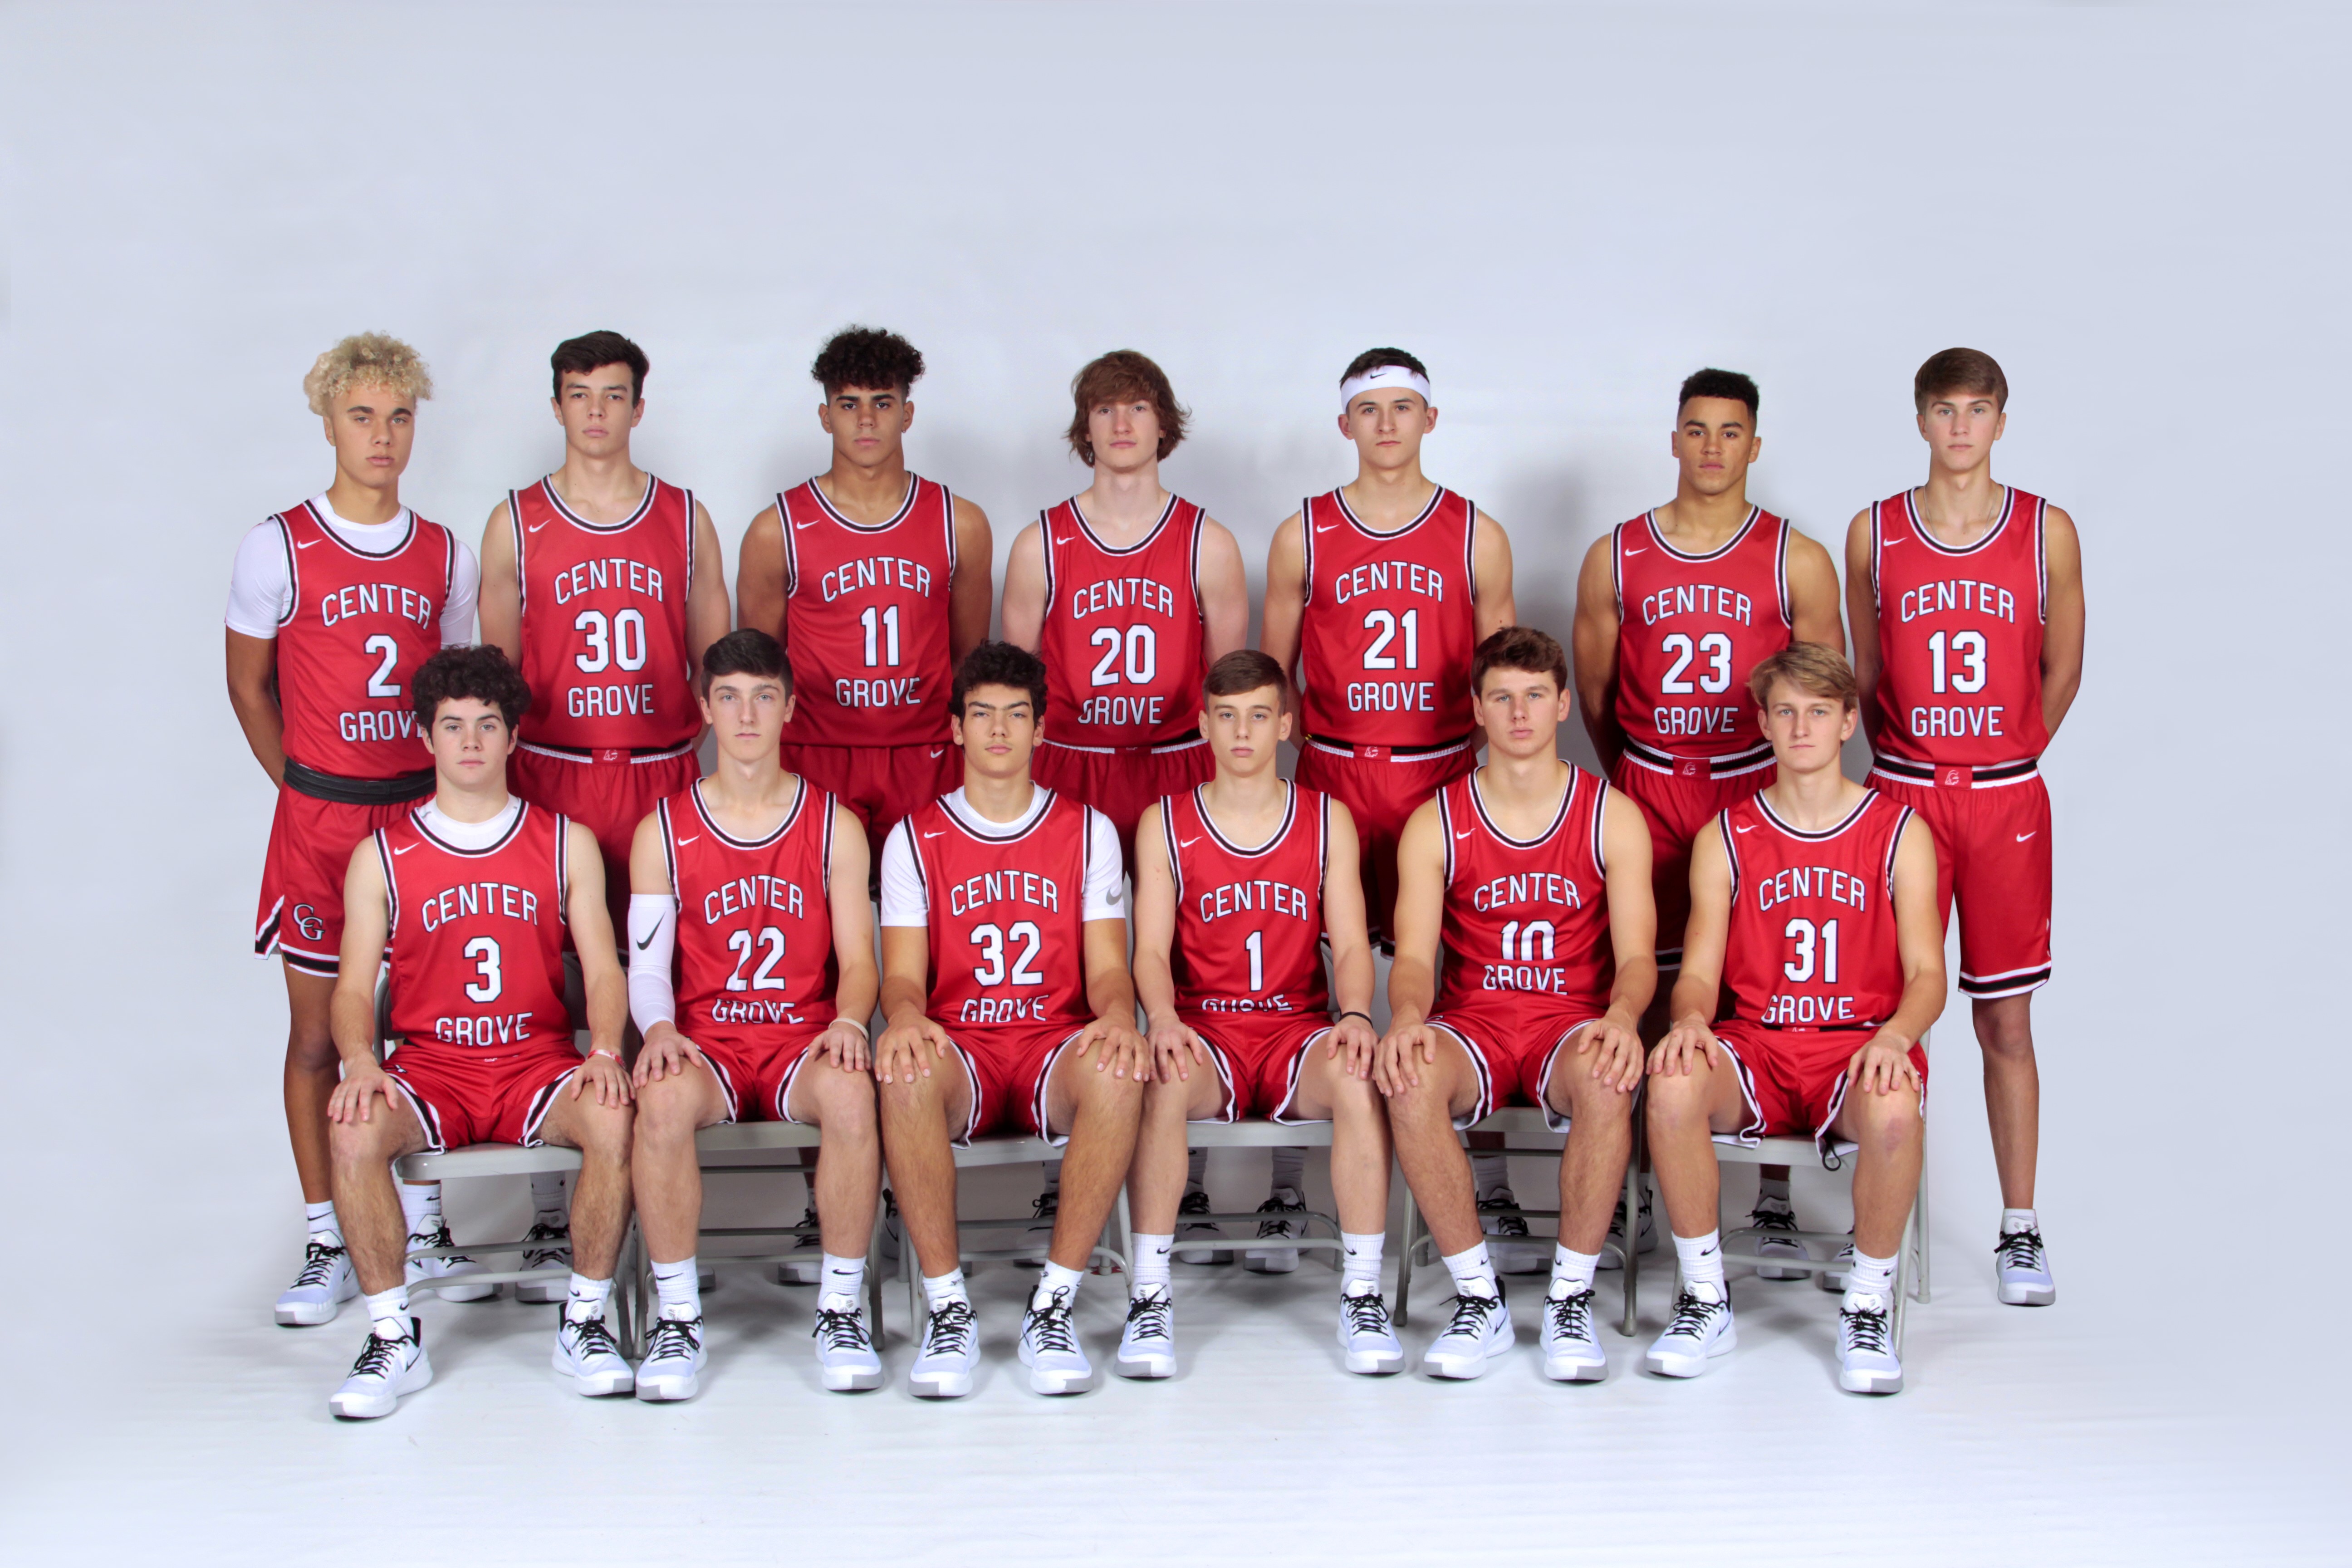 2019-2020 varsity team